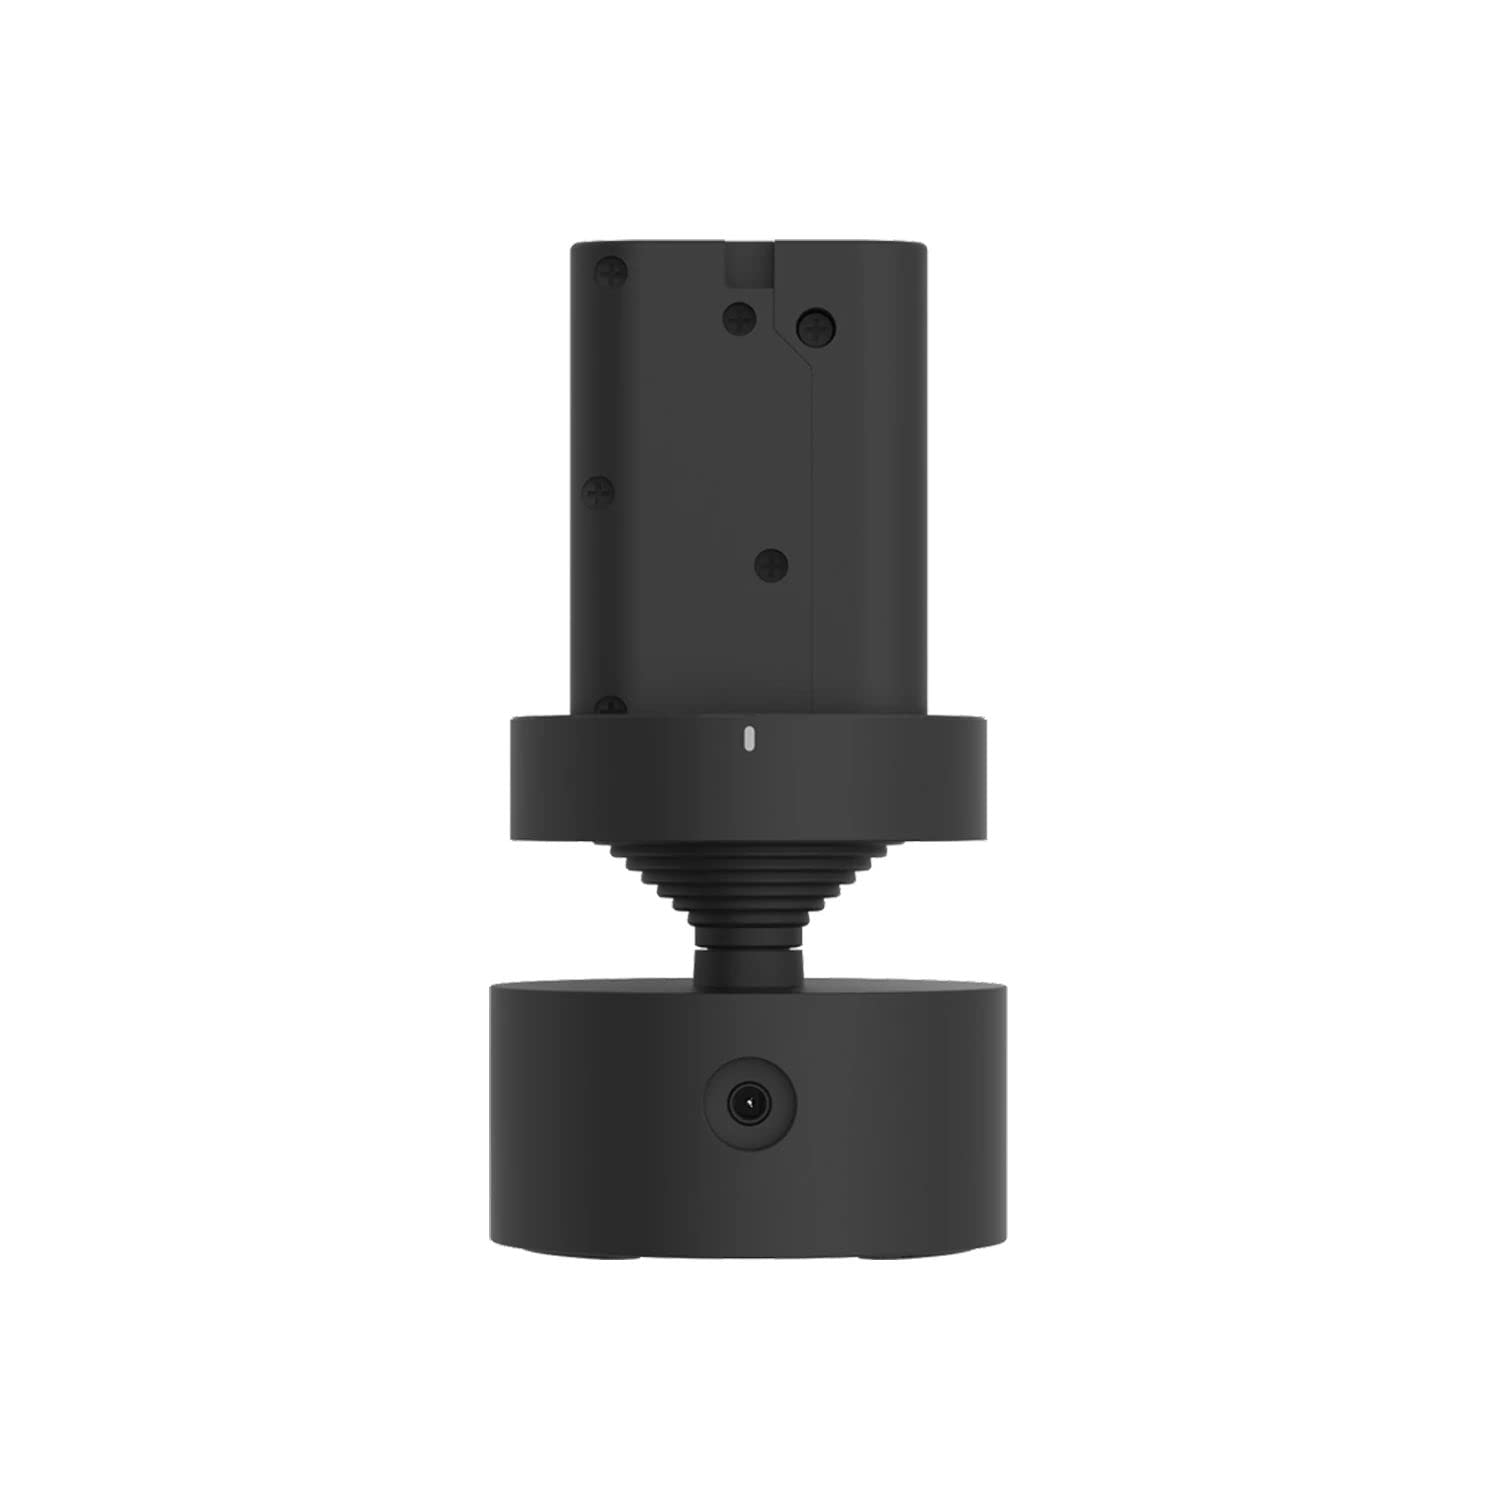 Ring Indoor/Outdoor Pan-Tilt Mount for Ring Stick Up Cam Plug-In - Black (Certified Refurbished)